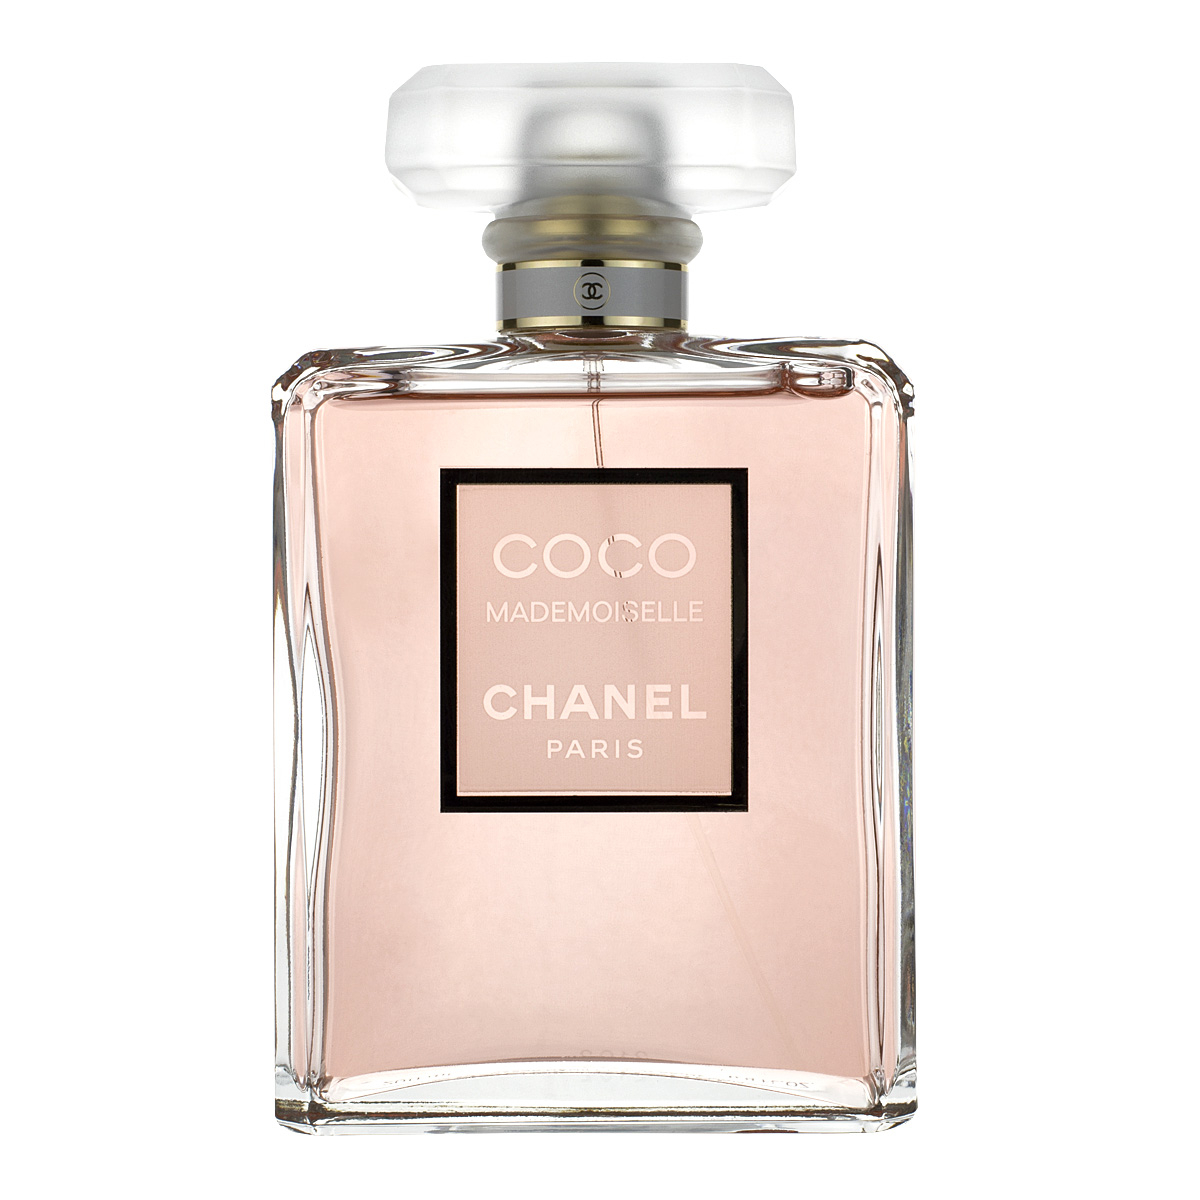 Chanel Coco Mademoiselle Eau de Parfum Spray 200ml